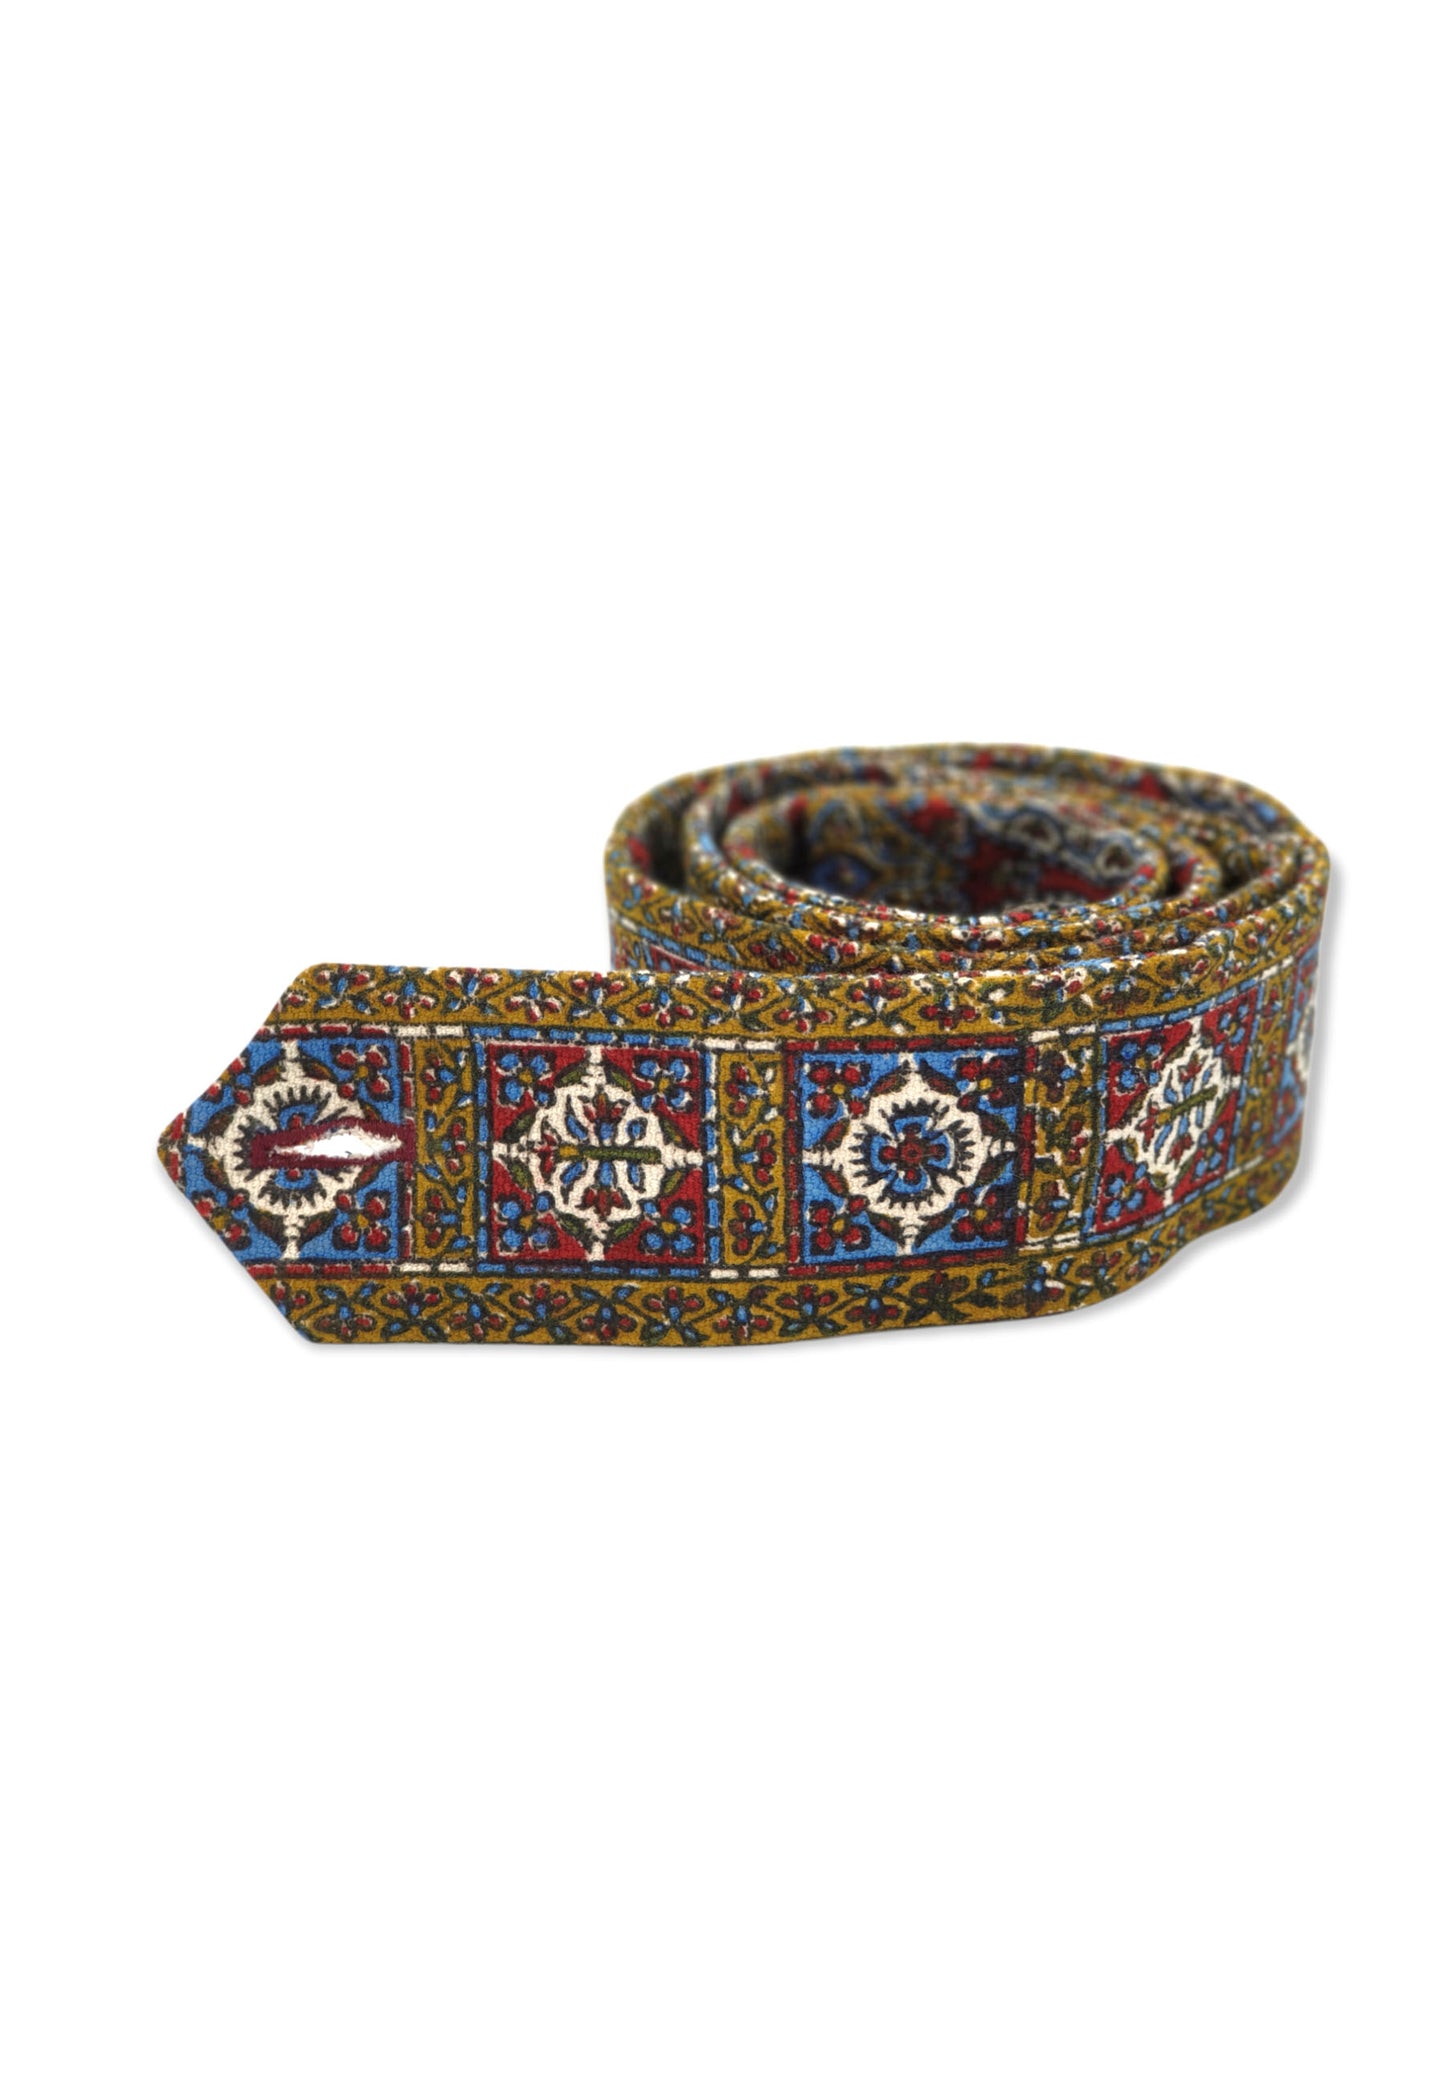 AFROZAN Handprinted Fabric Belt - Multicolor AC03